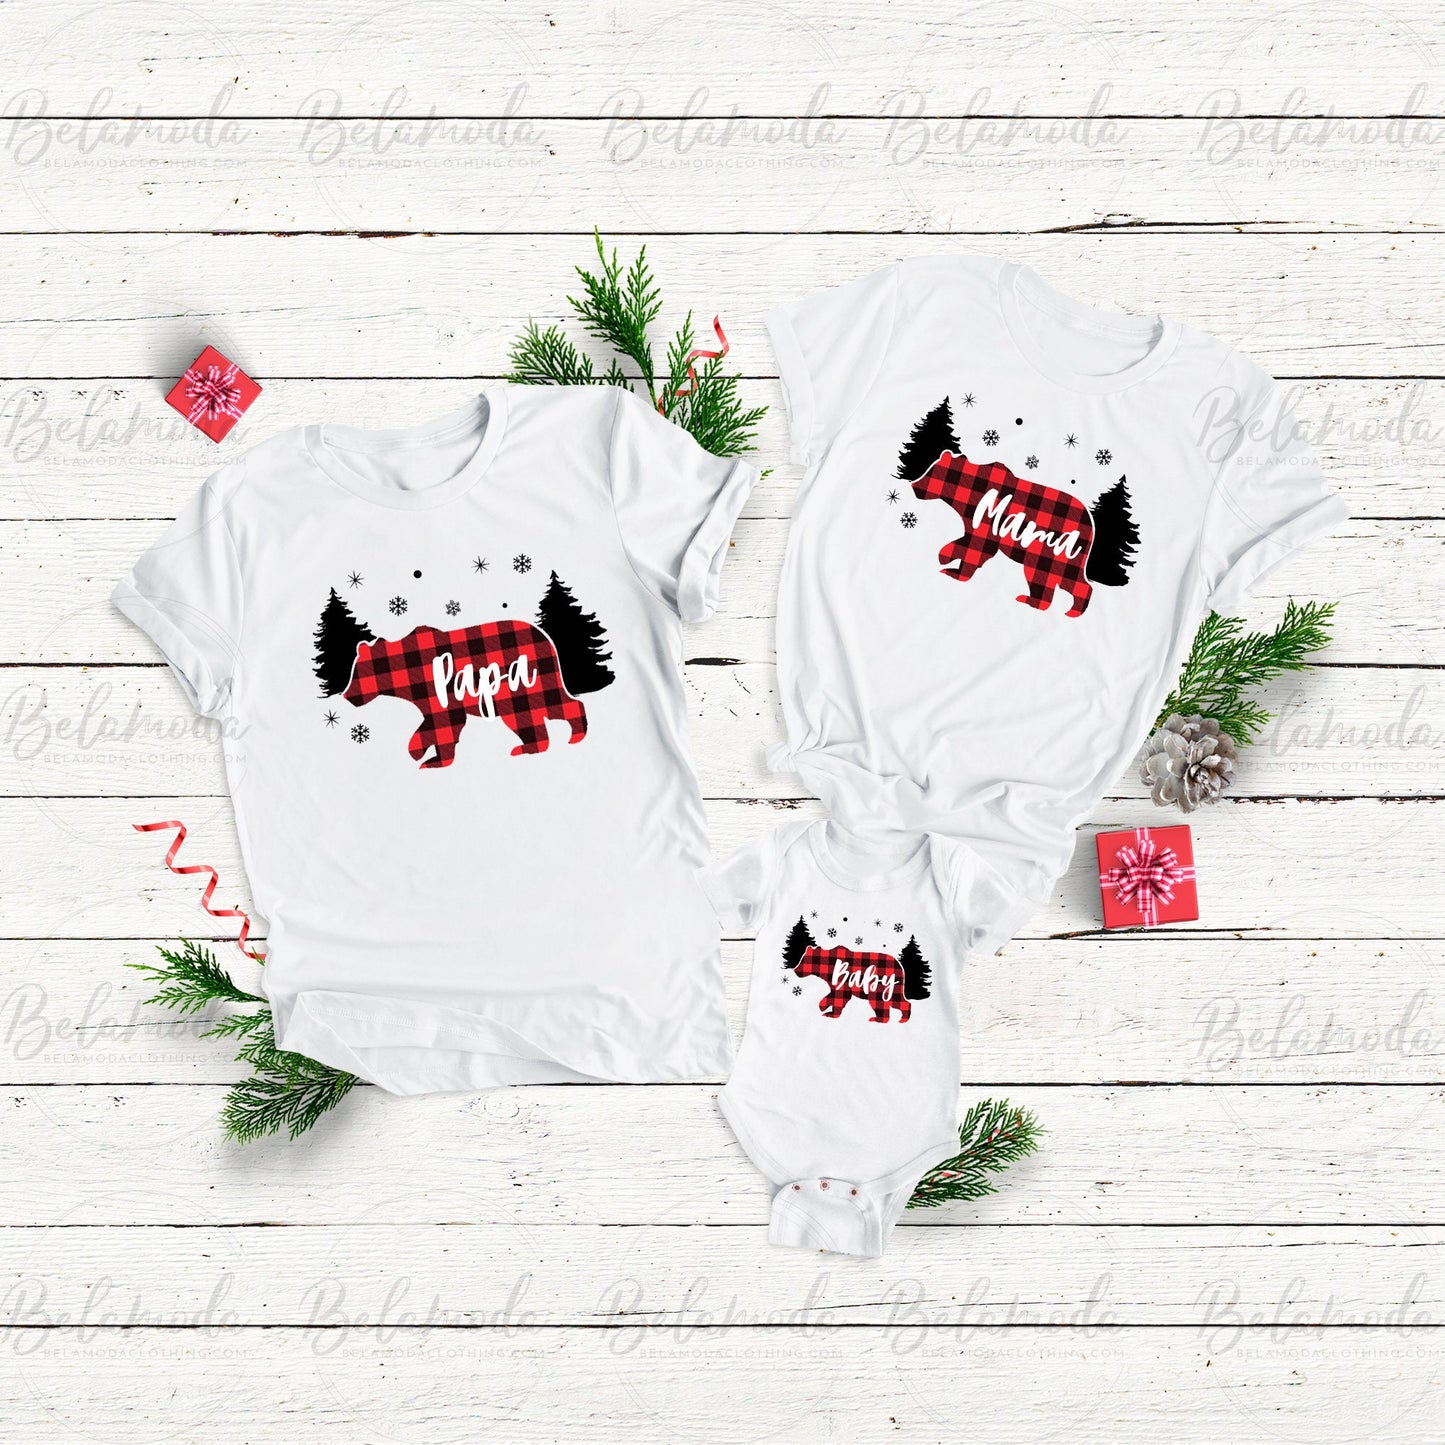 Matching Christmas Bear Shirts, Soft Family Matching Shirts, Custom Christmas Shirts, Kids Christmas Shirts,Family Holiday Shirts